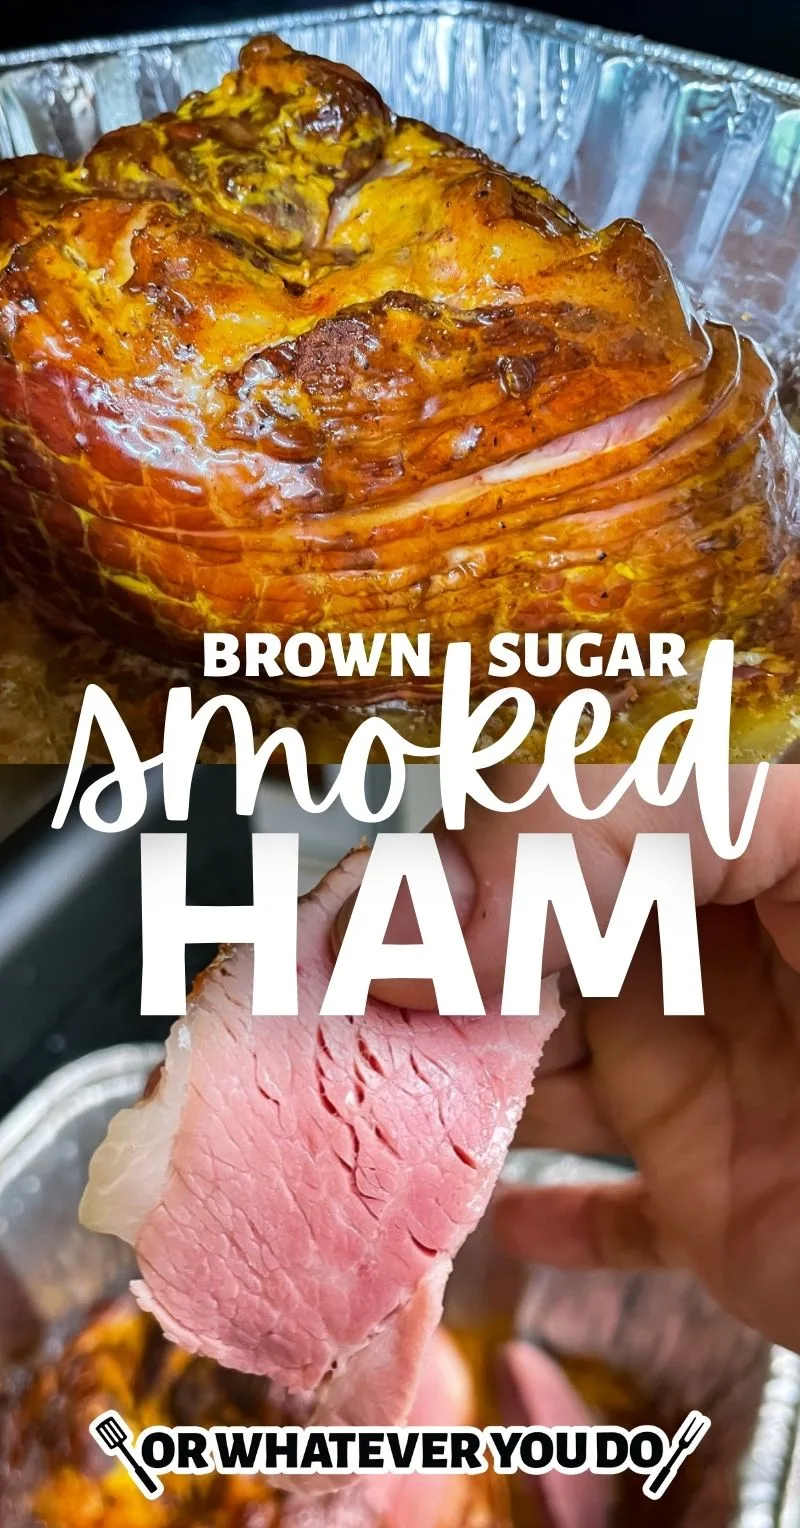 https://www.orwhateveryoudo.com/wp-content/uploads/2021/08/Brown-Sugar-Smoked-Ham.jpg.webp